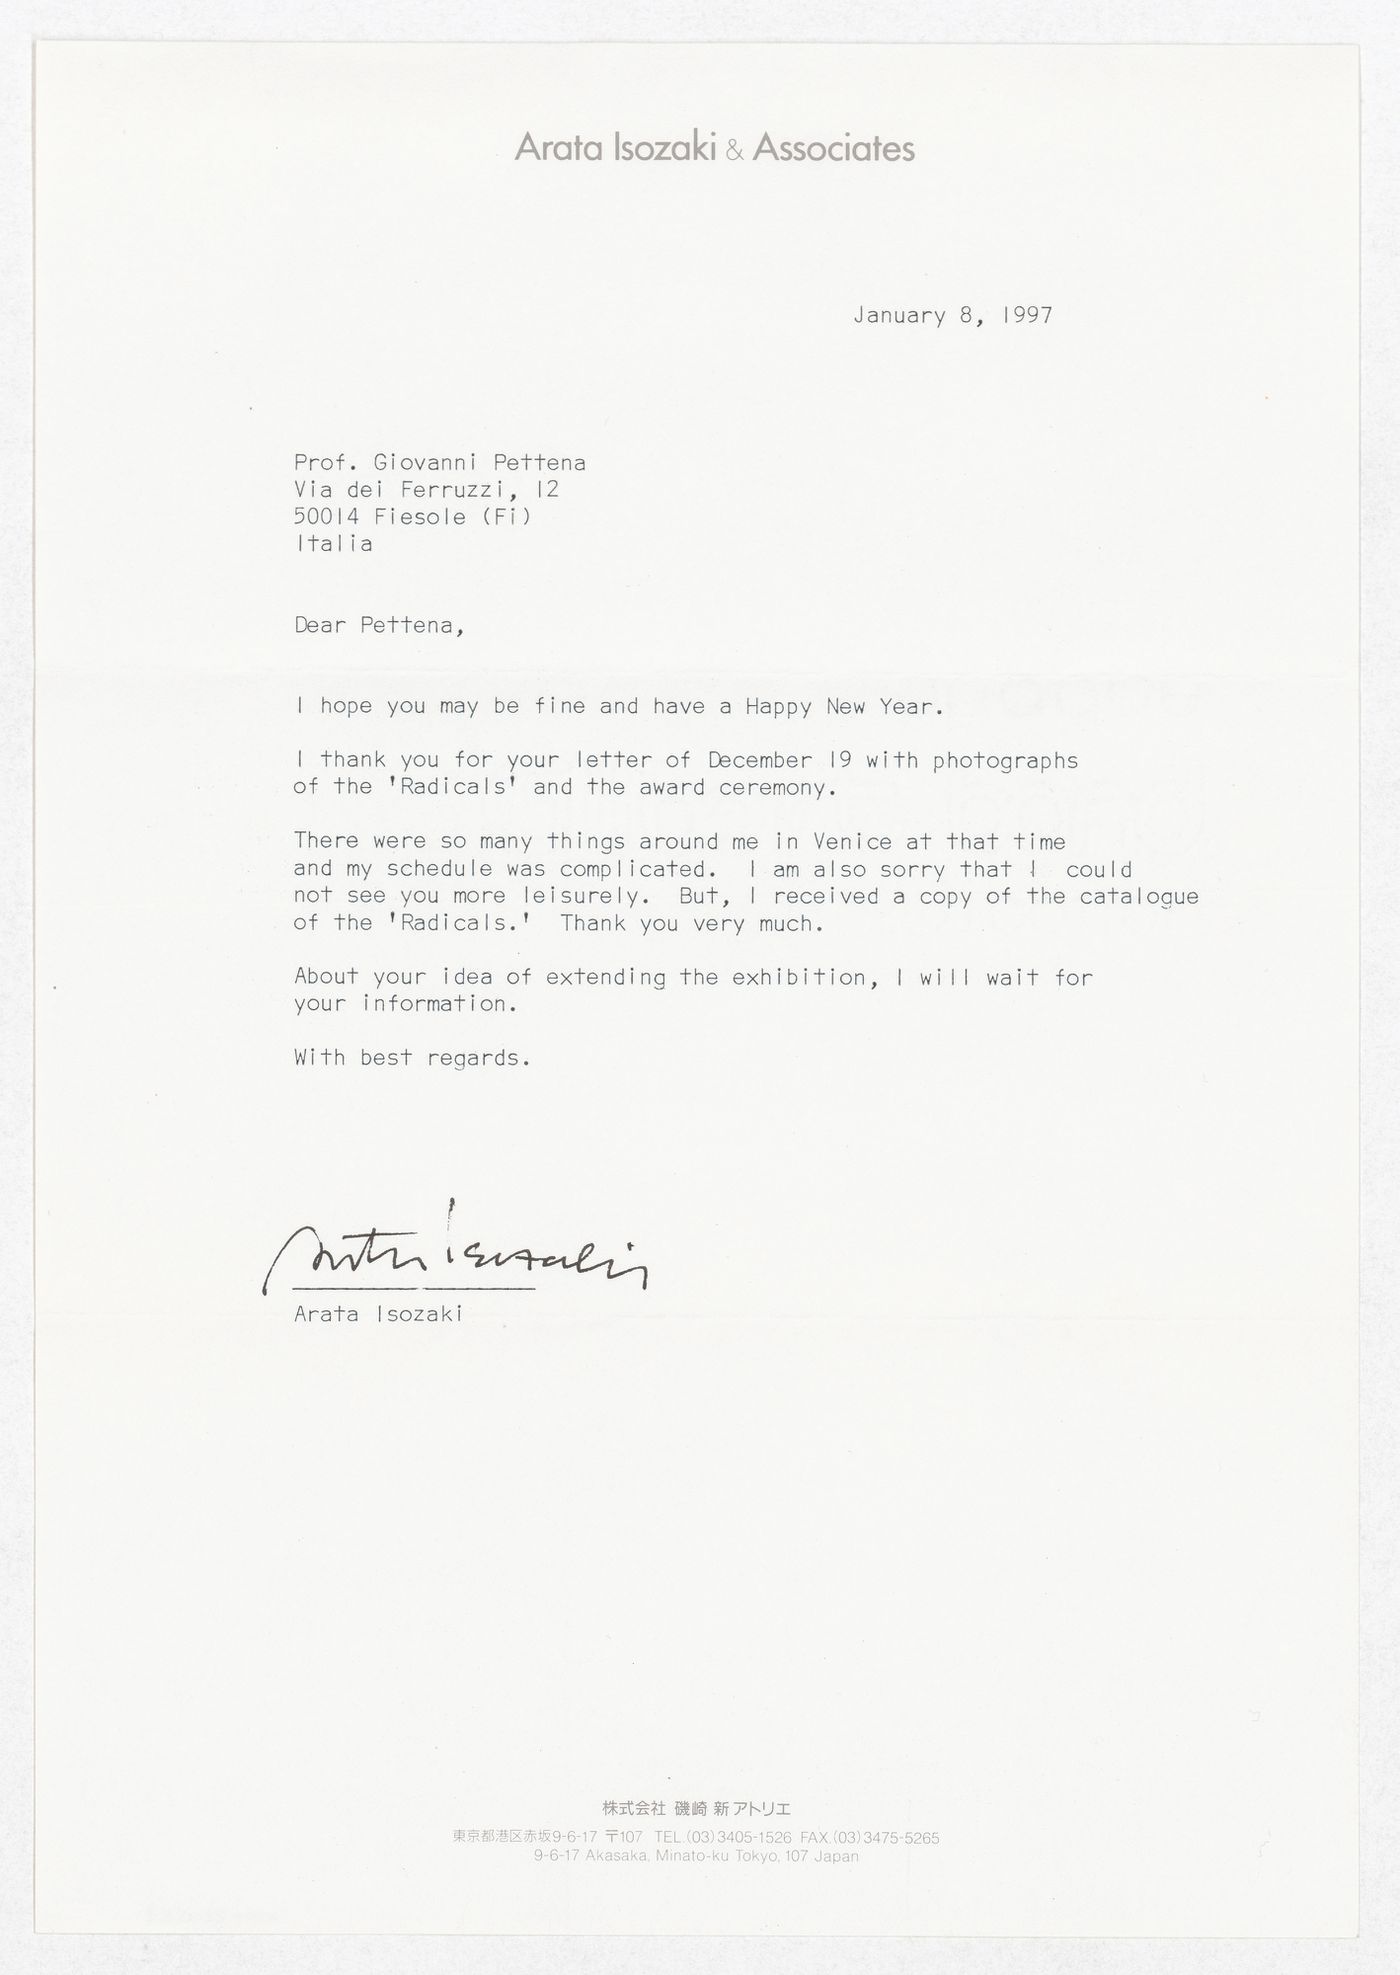 Correspondence from Arata Isozaki regarding the exhibition Radicals. Architecttura e Design 1960-1975